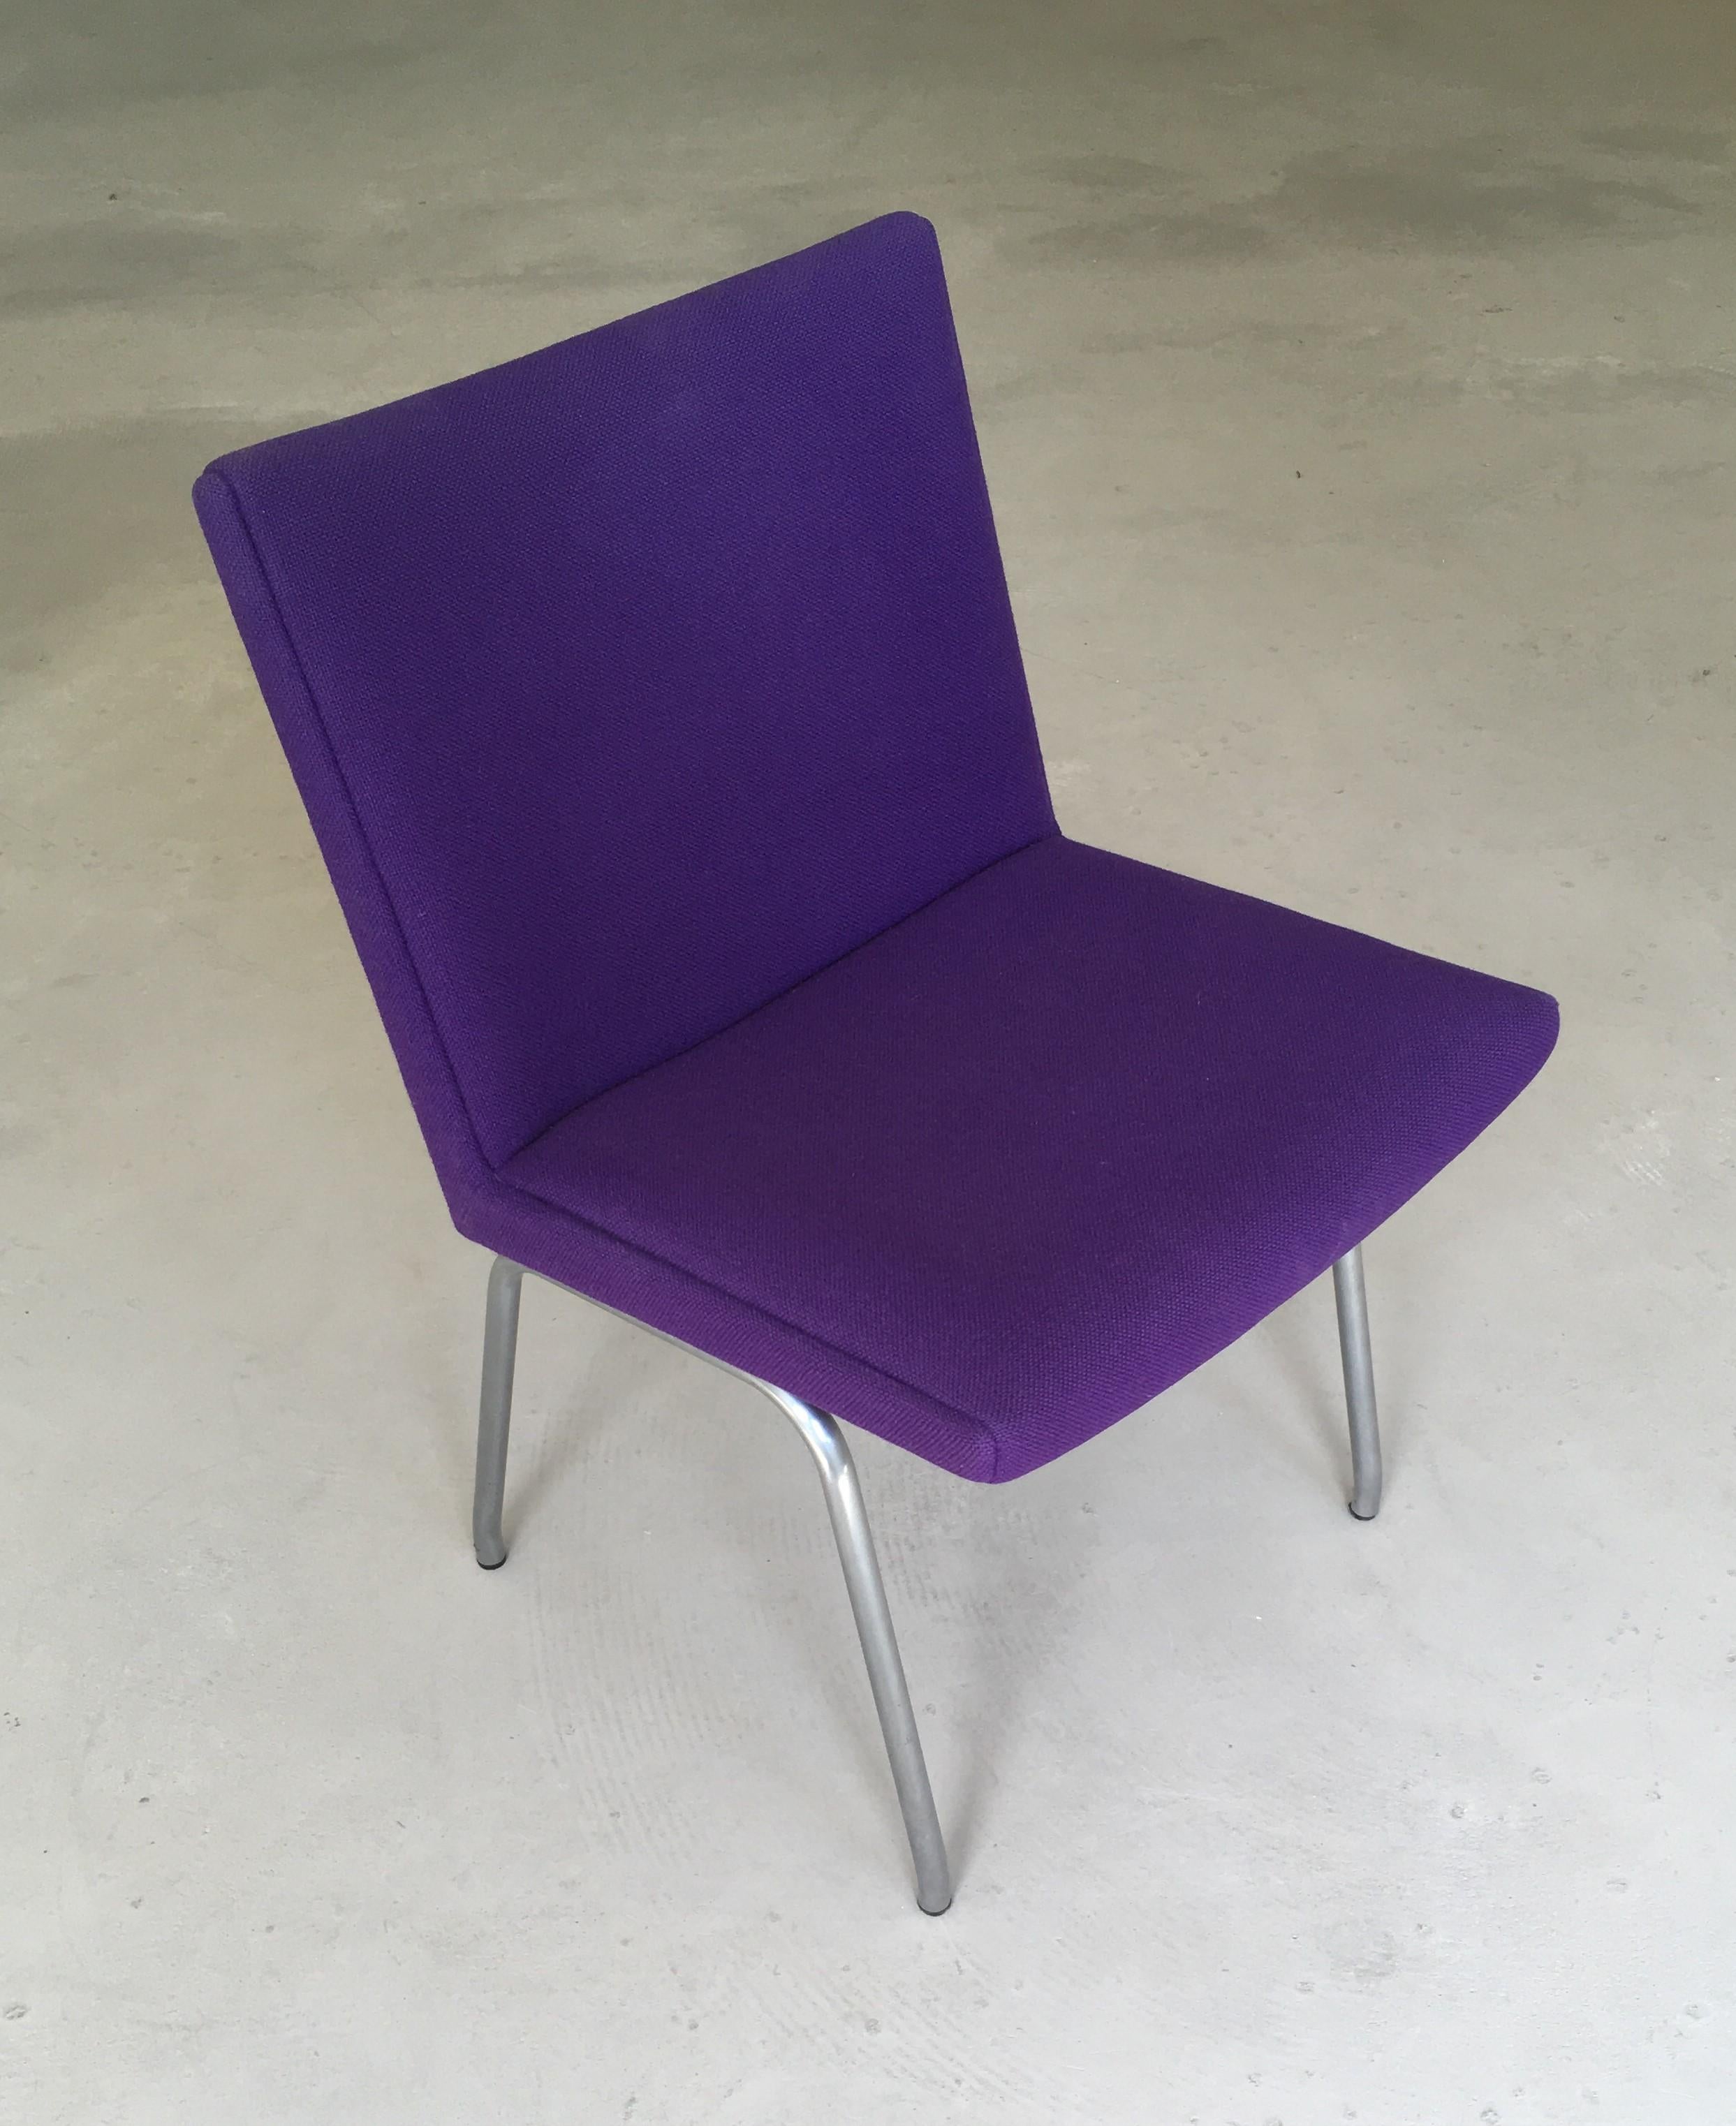 1960s Danish Hans J. Wegner Airport Chair, Reupholstered in Purple Fabric For Sale 3